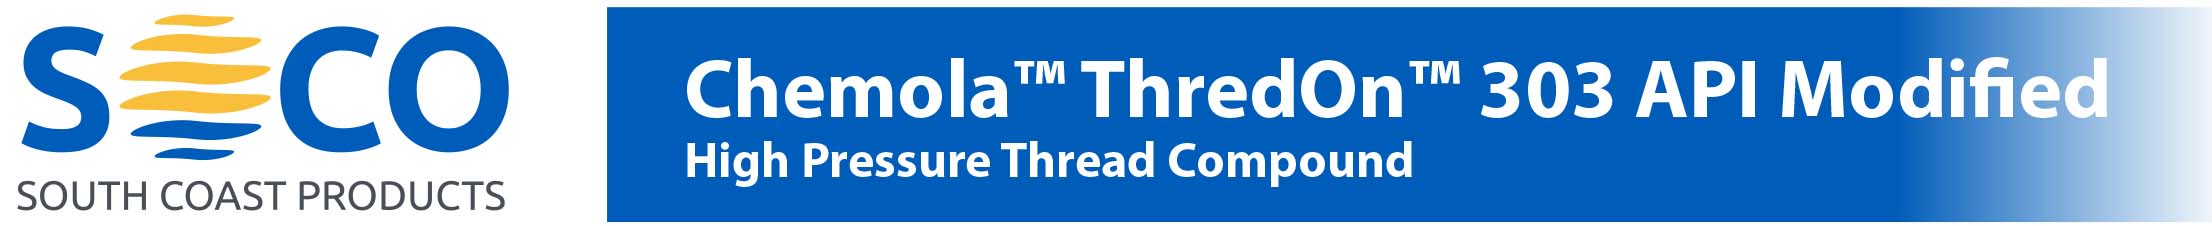 ThredOn 303 API Modified